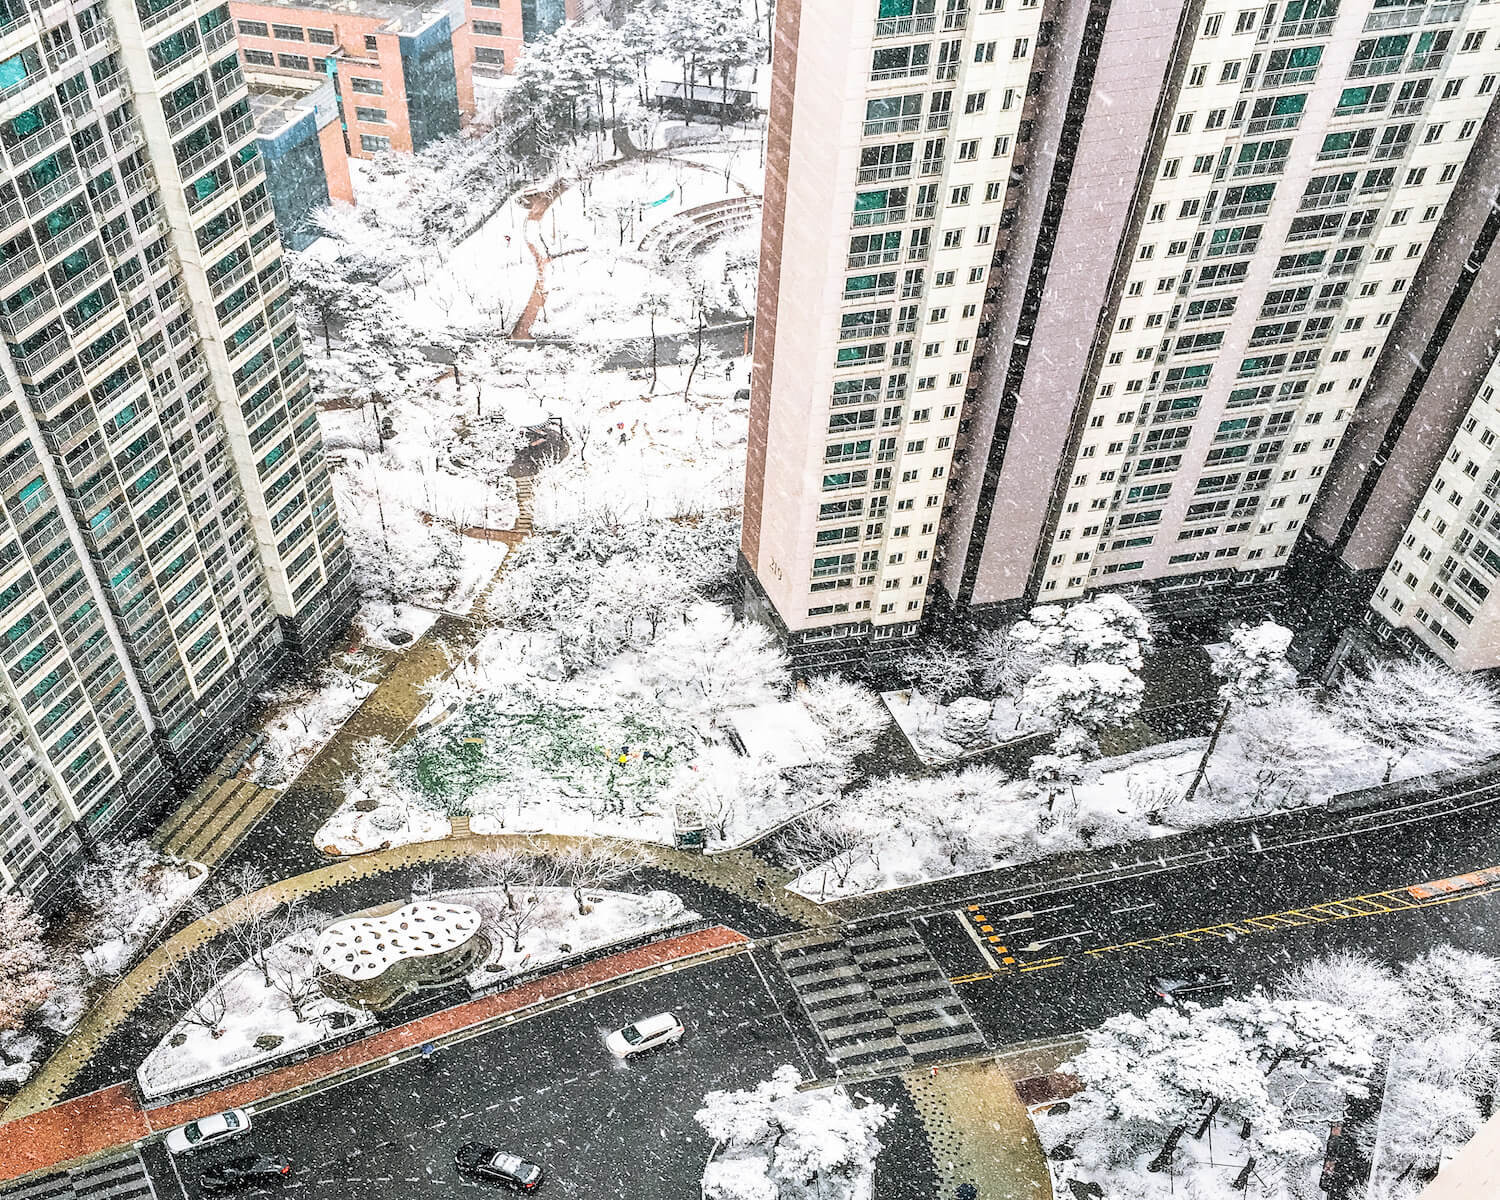 snow in seoul during winter in korea